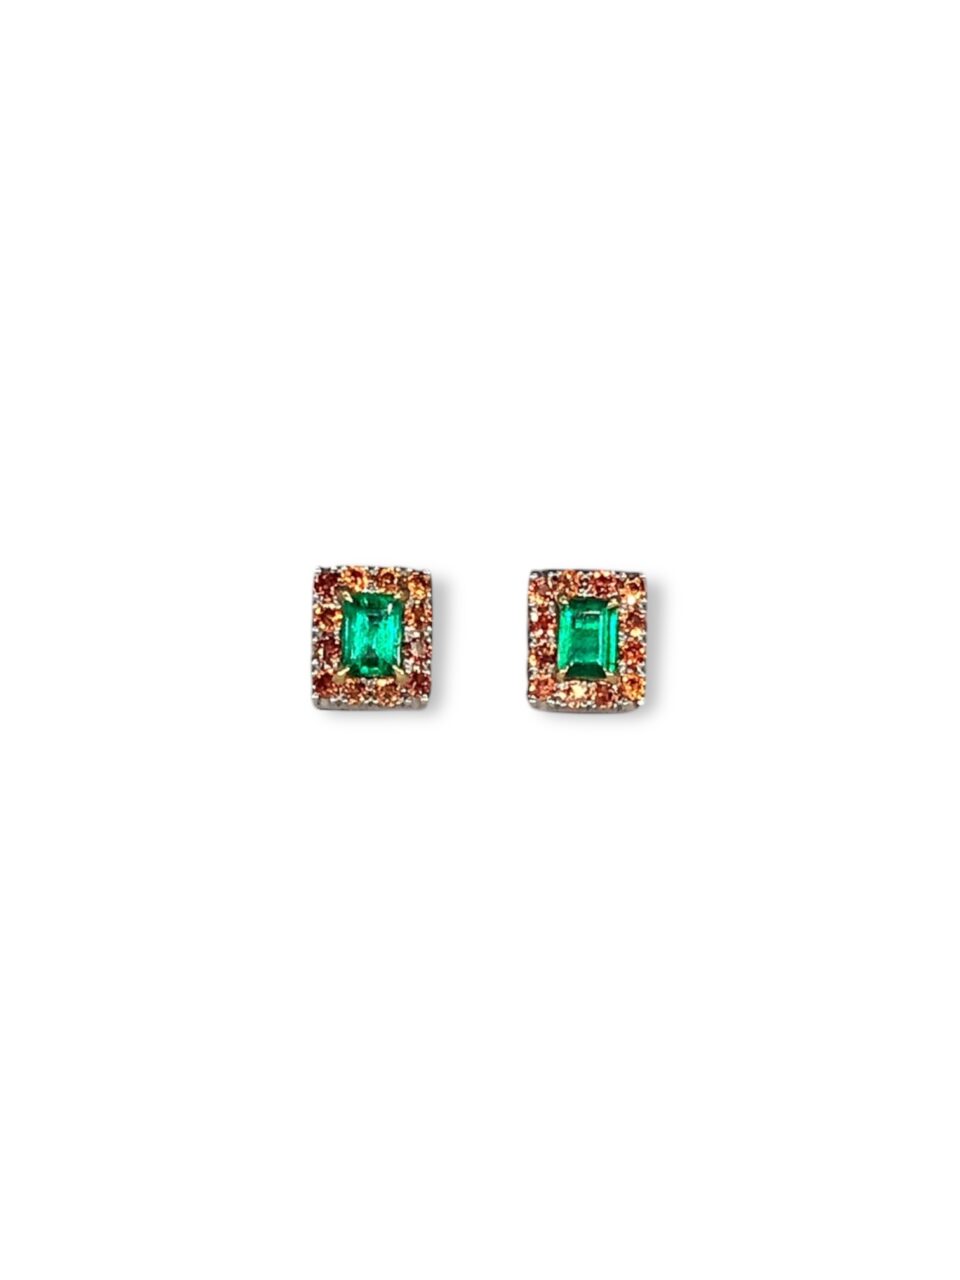 colombian emeralds, muzo emeralds, alpine green, emerald studs, george smith, emerald earrings